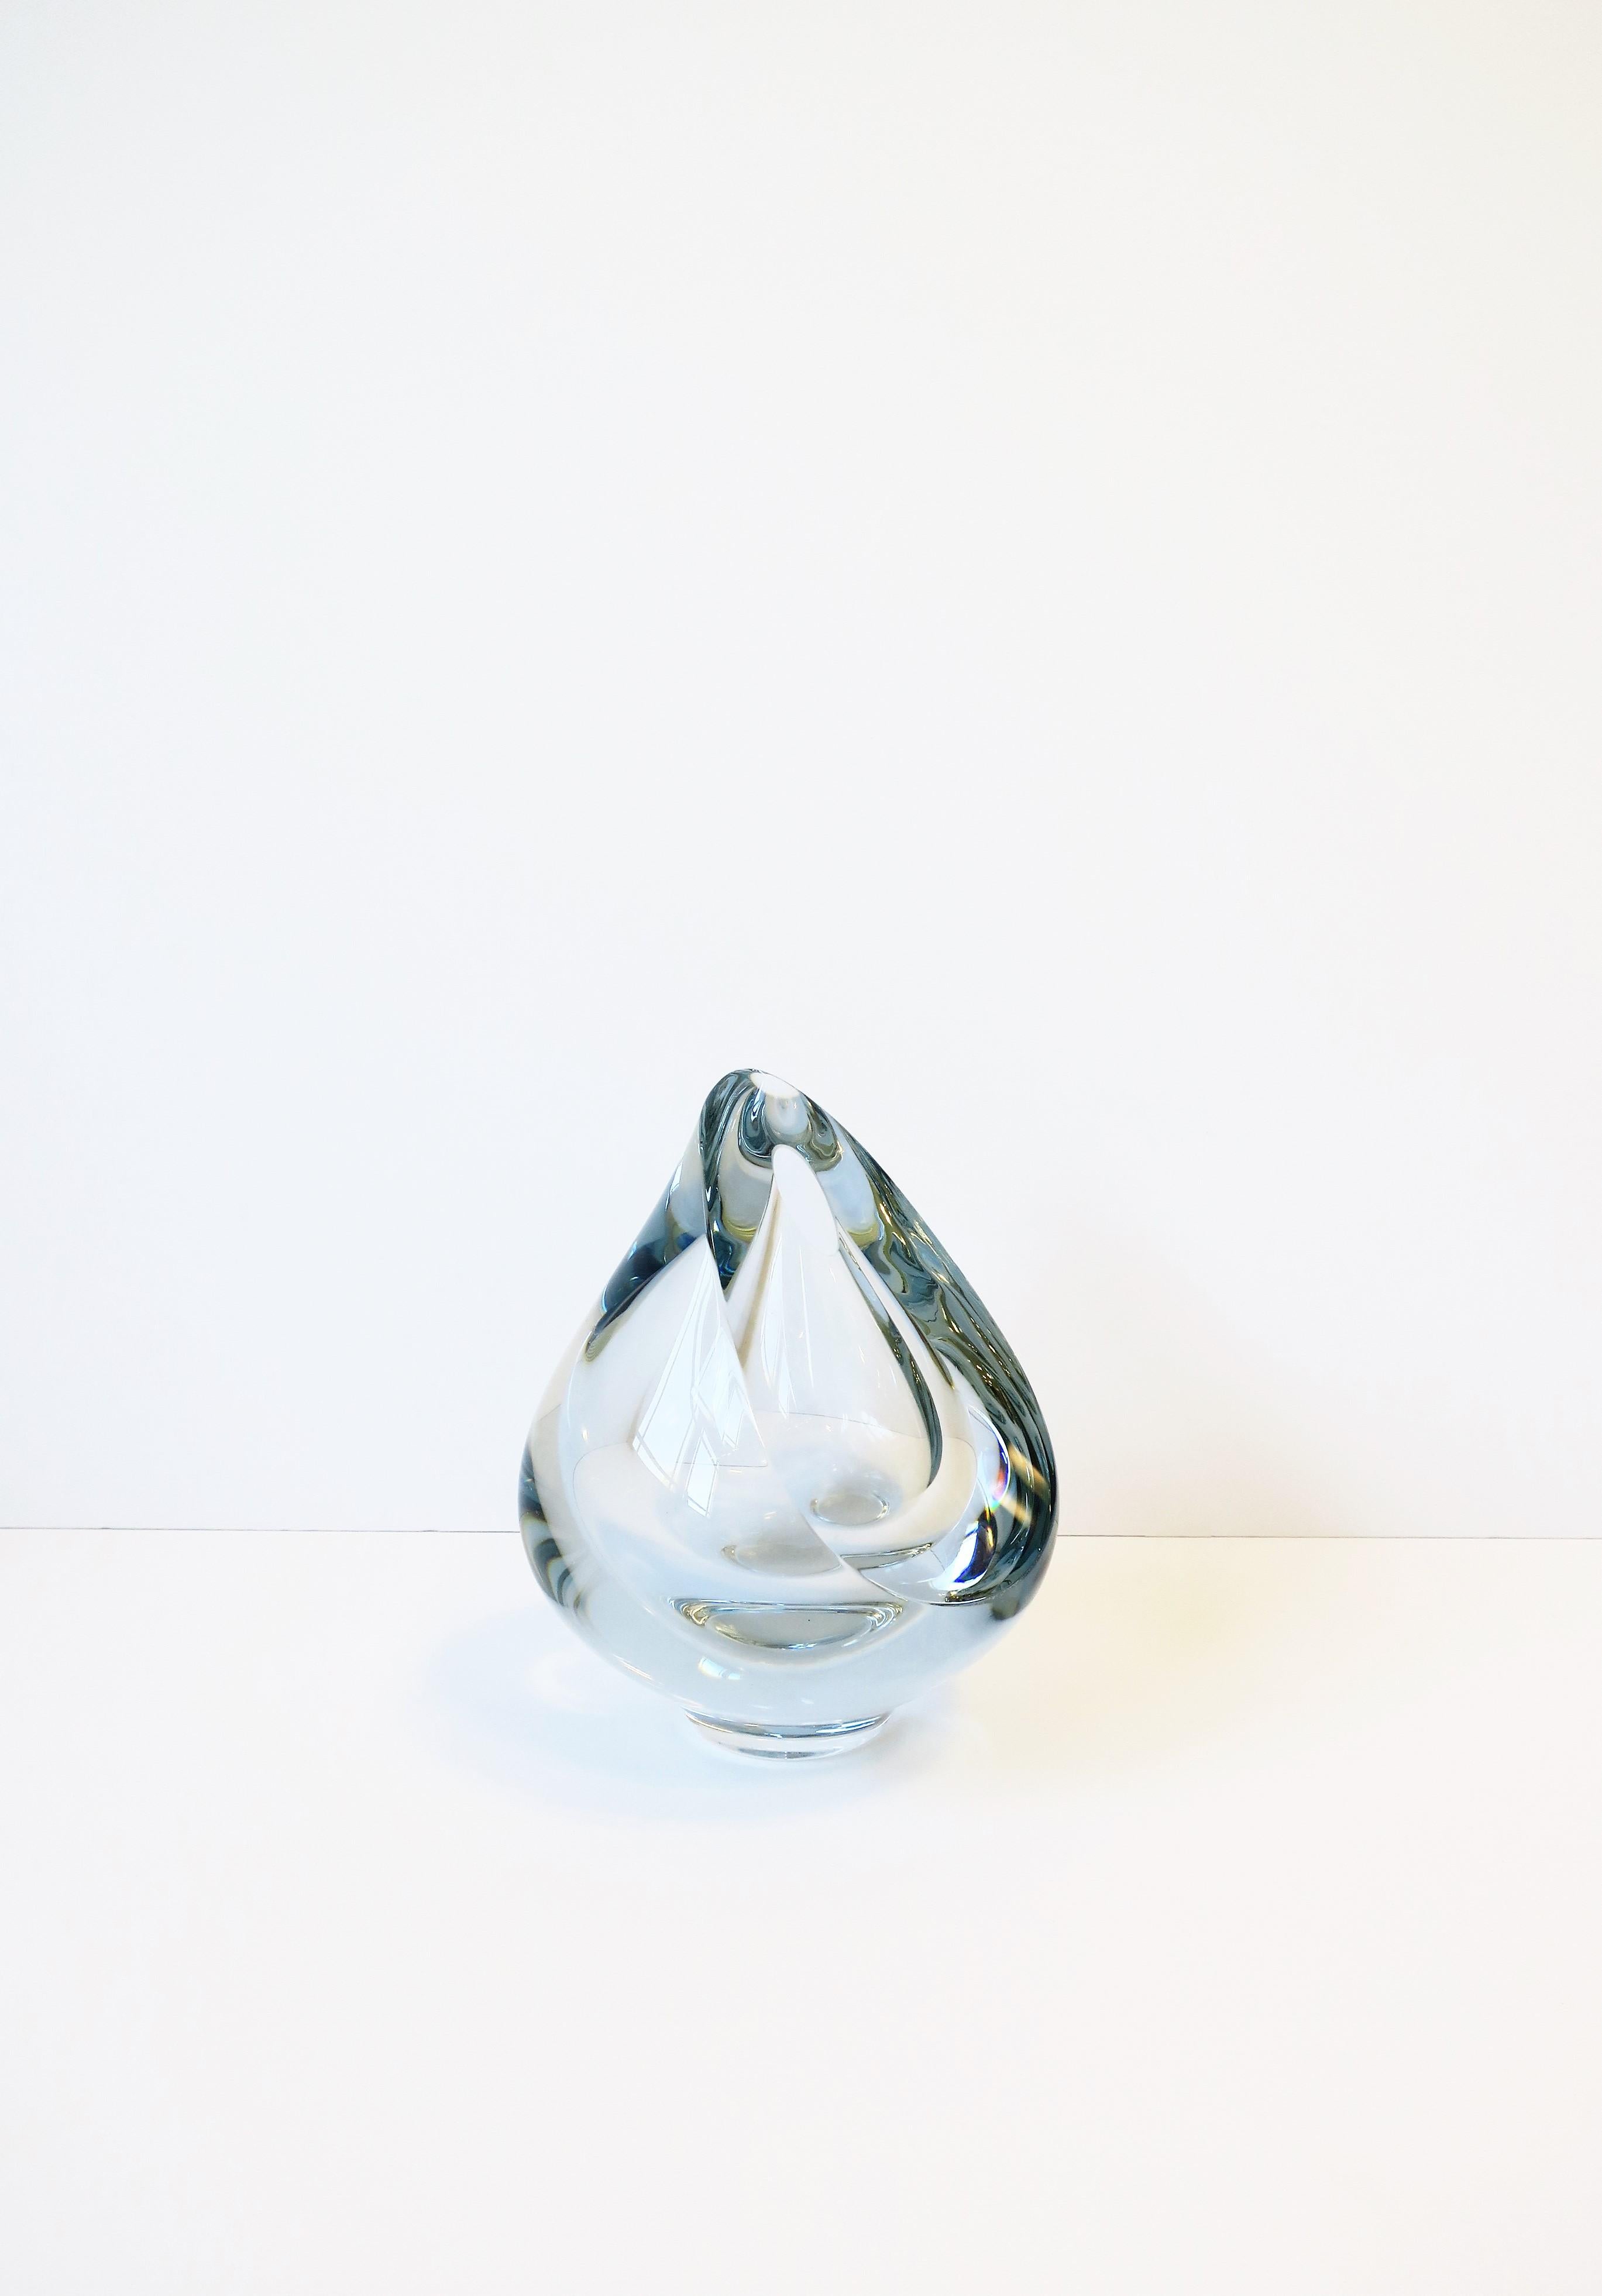 Crystal Art Glass Teardrop Vase or Decorative Object, Signed For Sale